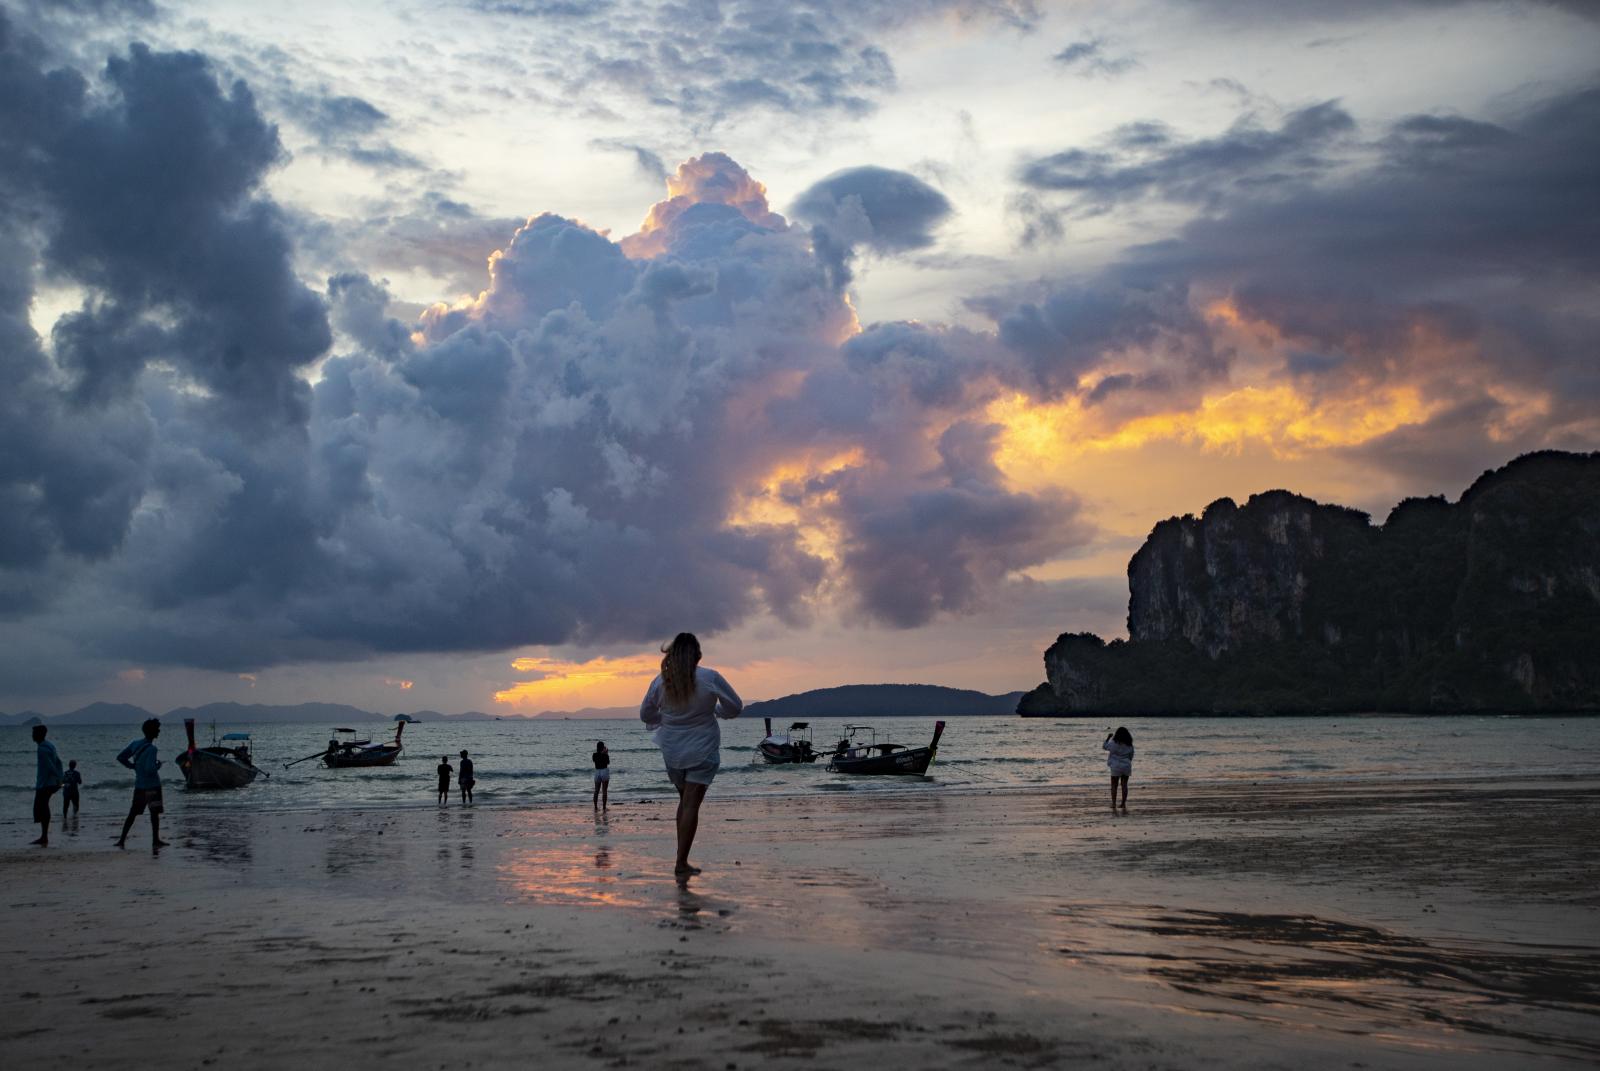 Krabi Sunset | Buy this image